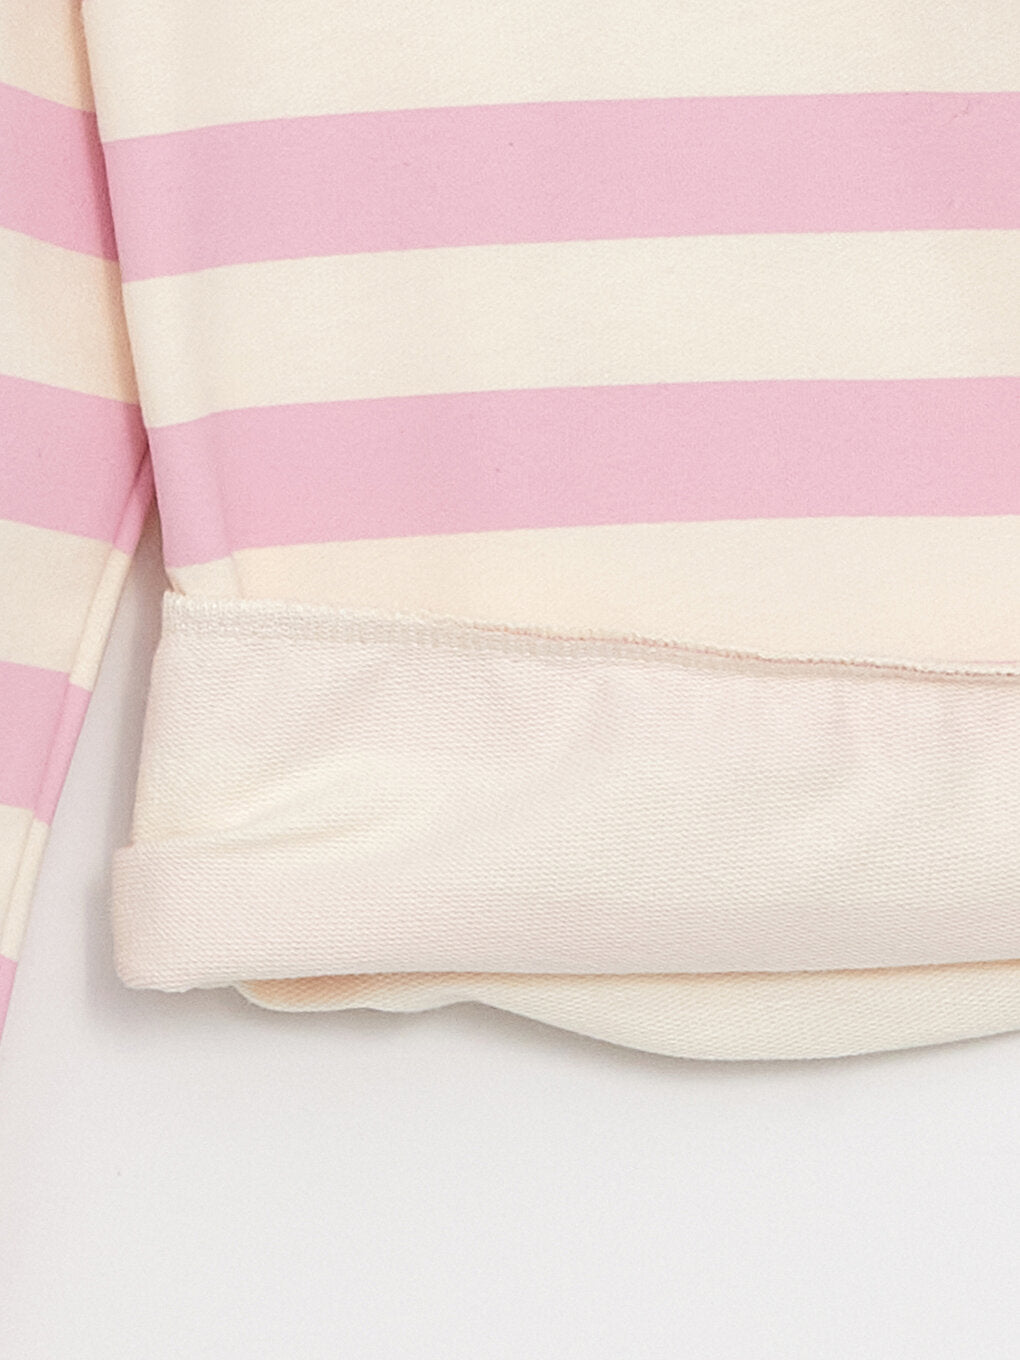 Polo Neck Striped Long Sleeve Girls Sweatshirt